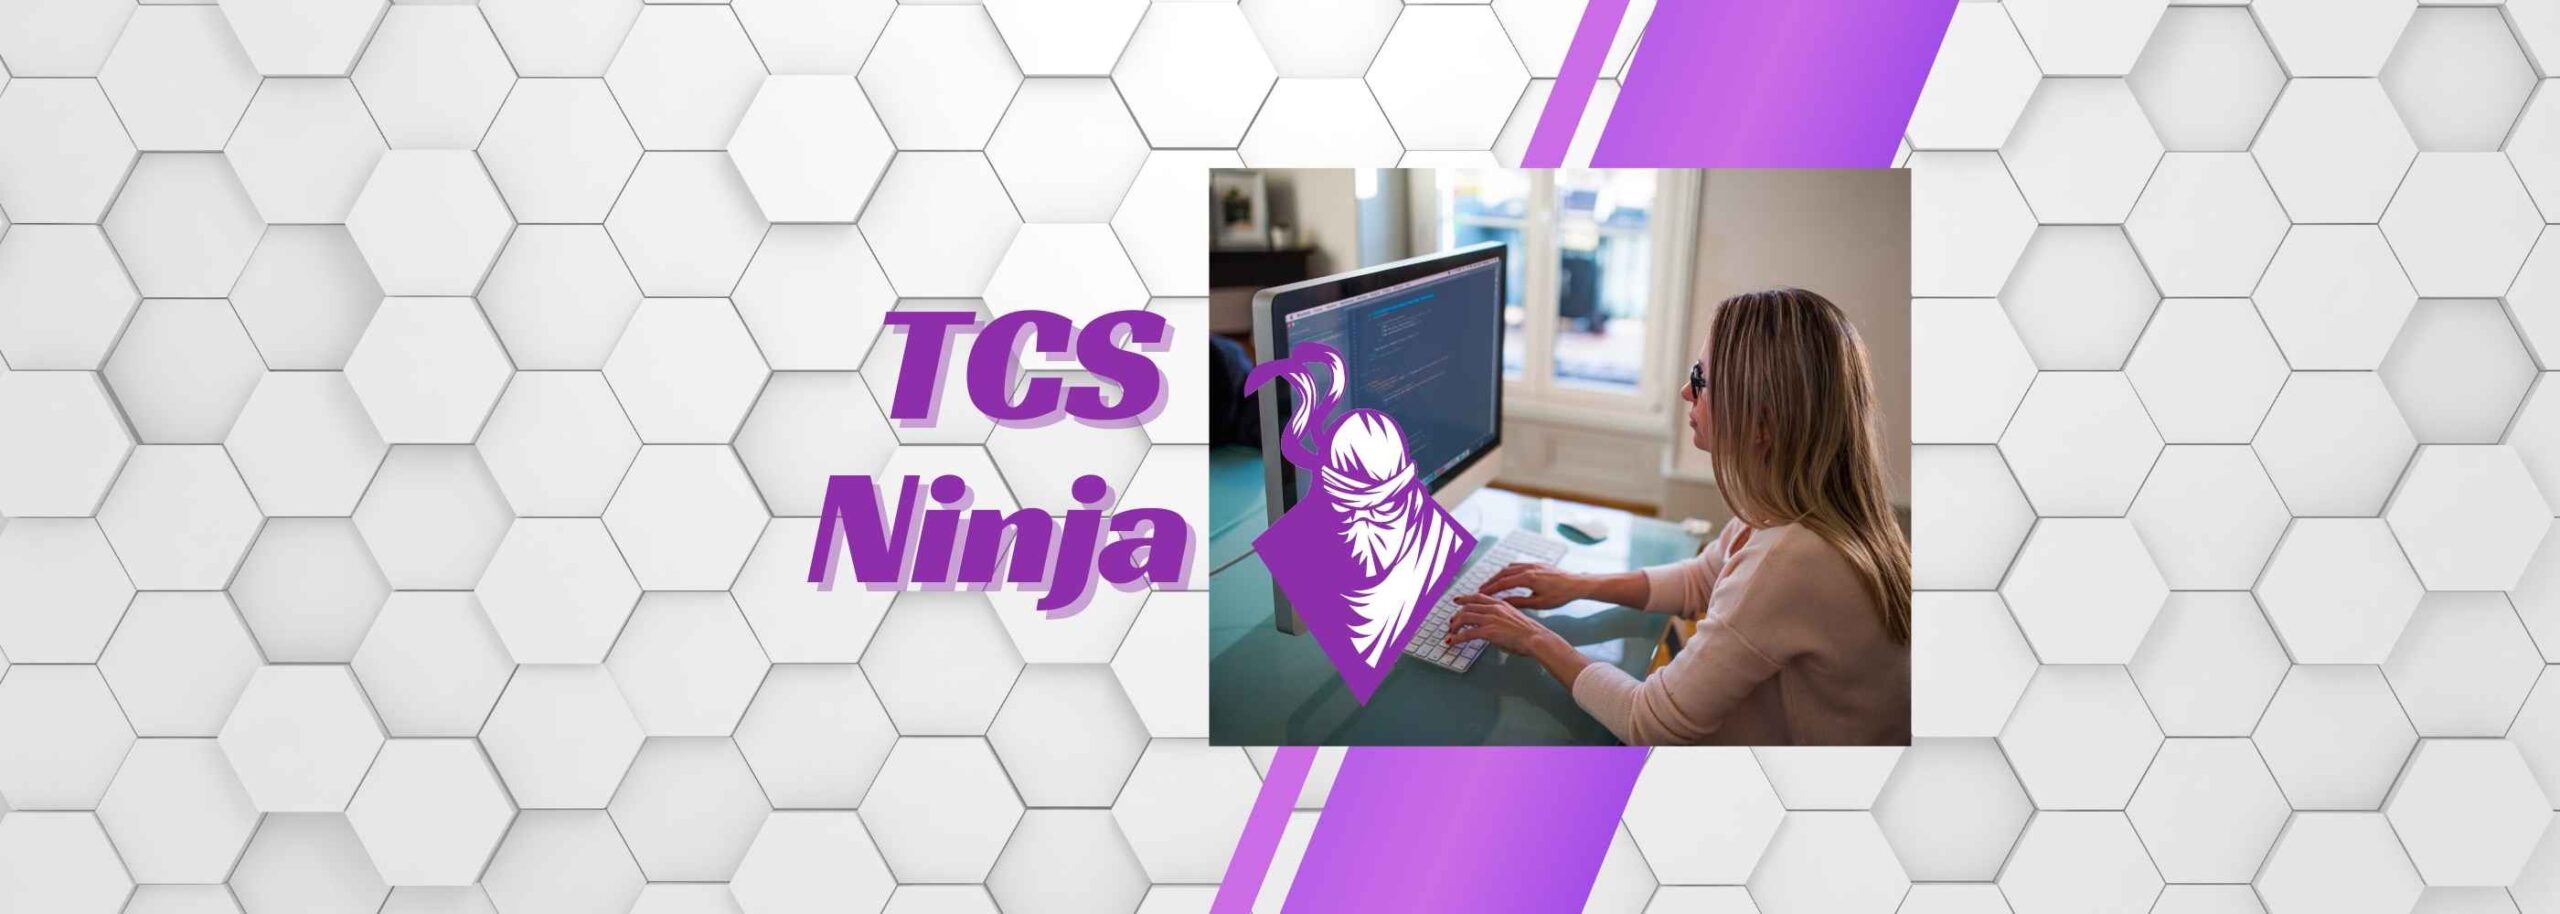 TCS Ninja Exam Eligibility Criteria, Interview Process, Salary and